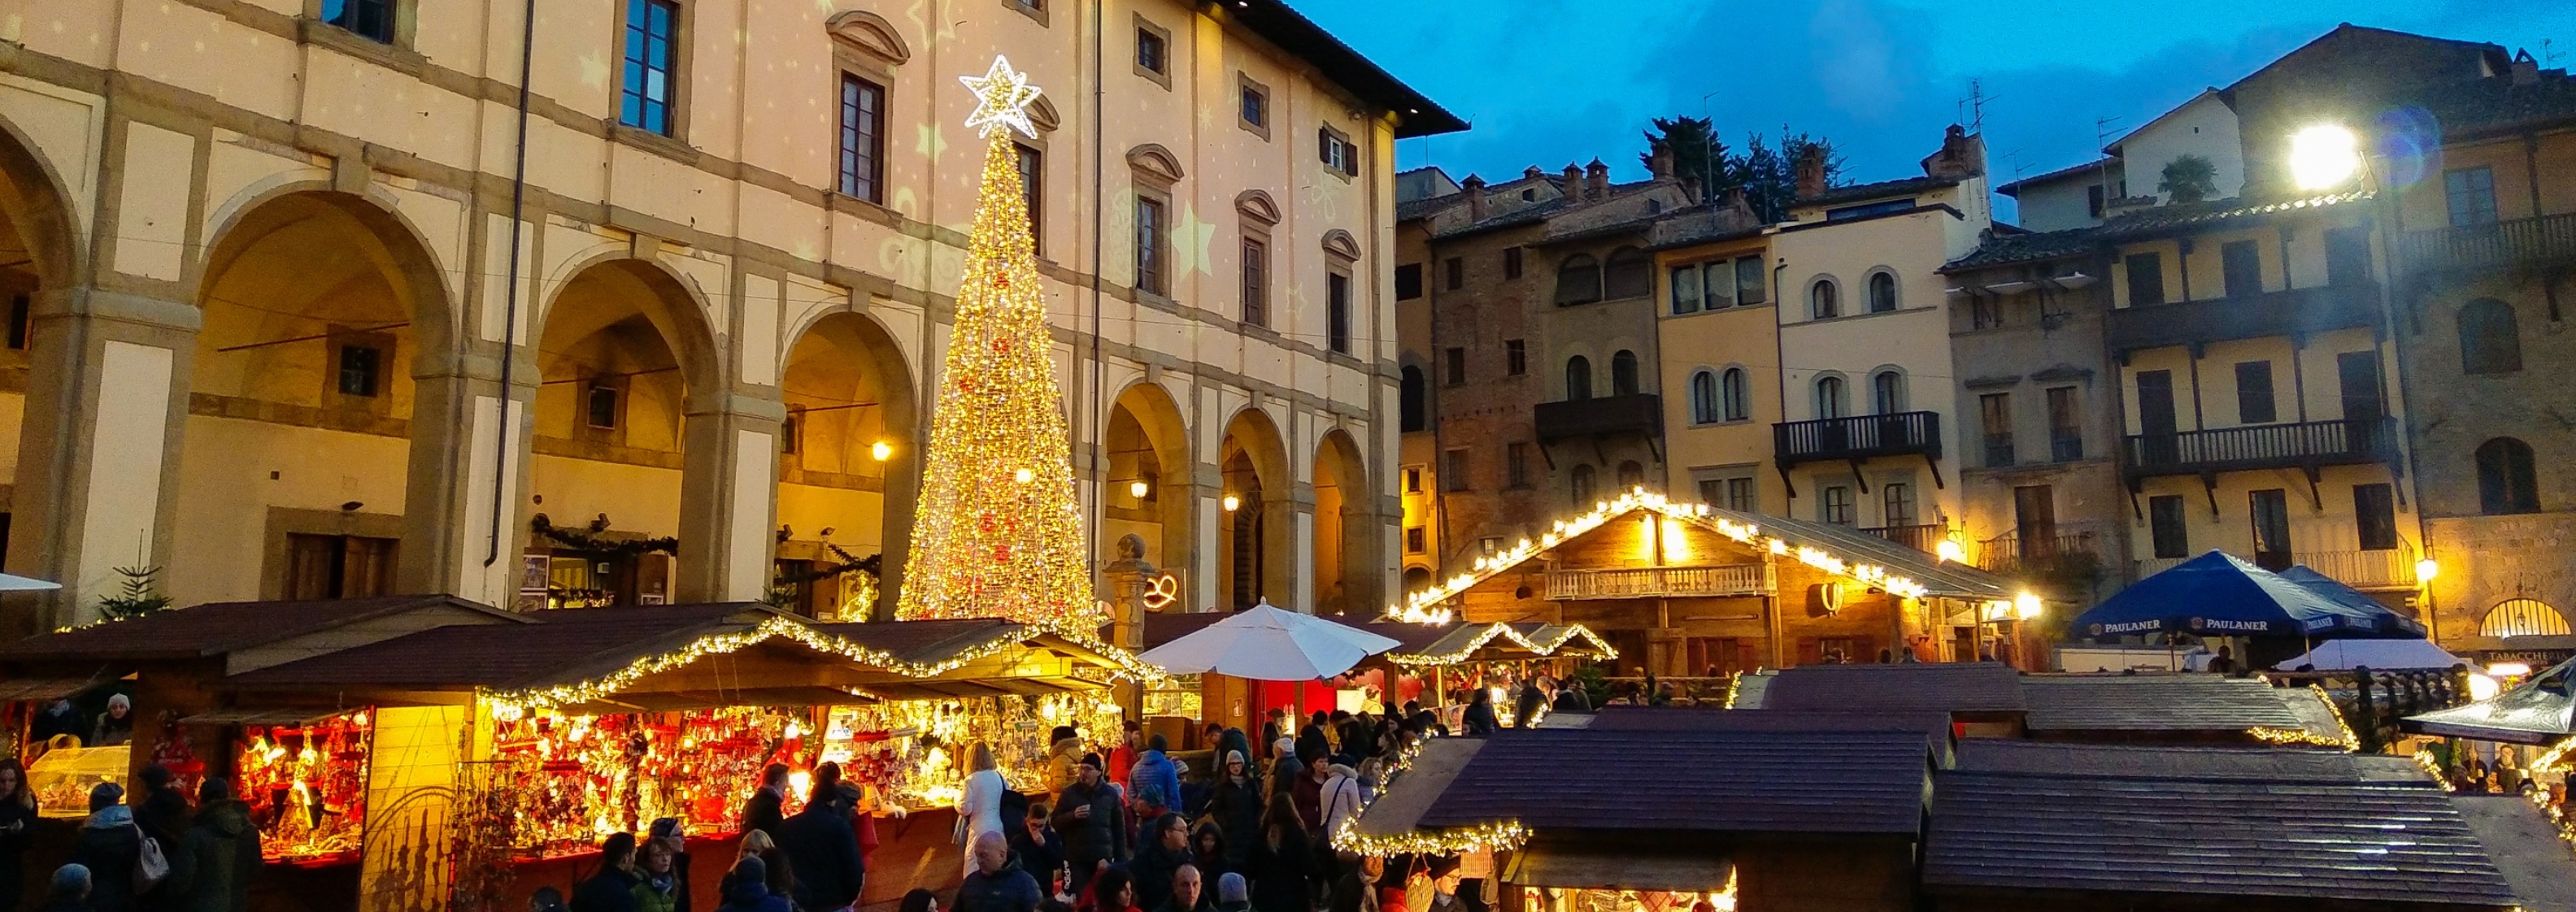 Christmas Market in Tuscany